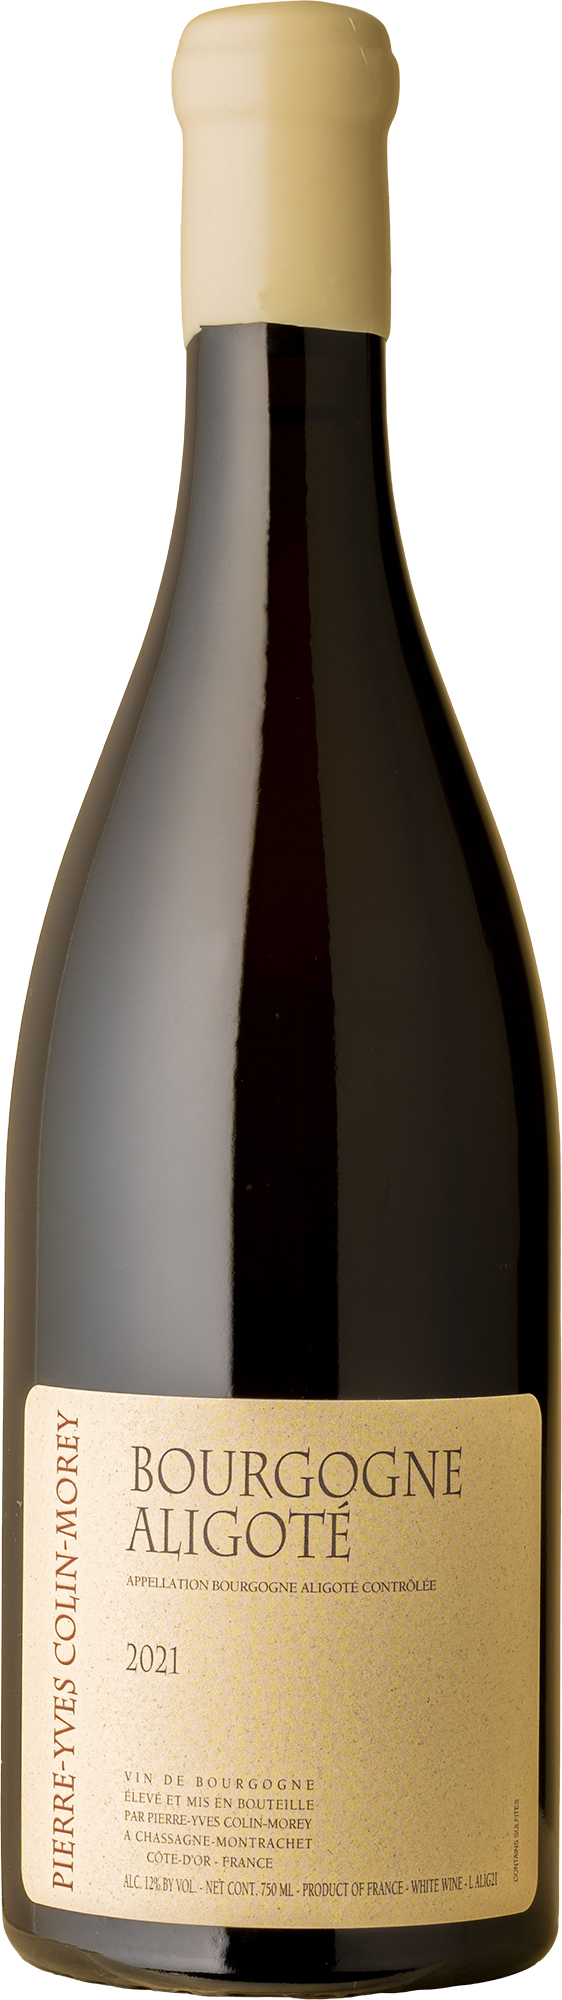 Pierre-Yves Colin-Morey - Bourgogne Aligote 2021 White Wine